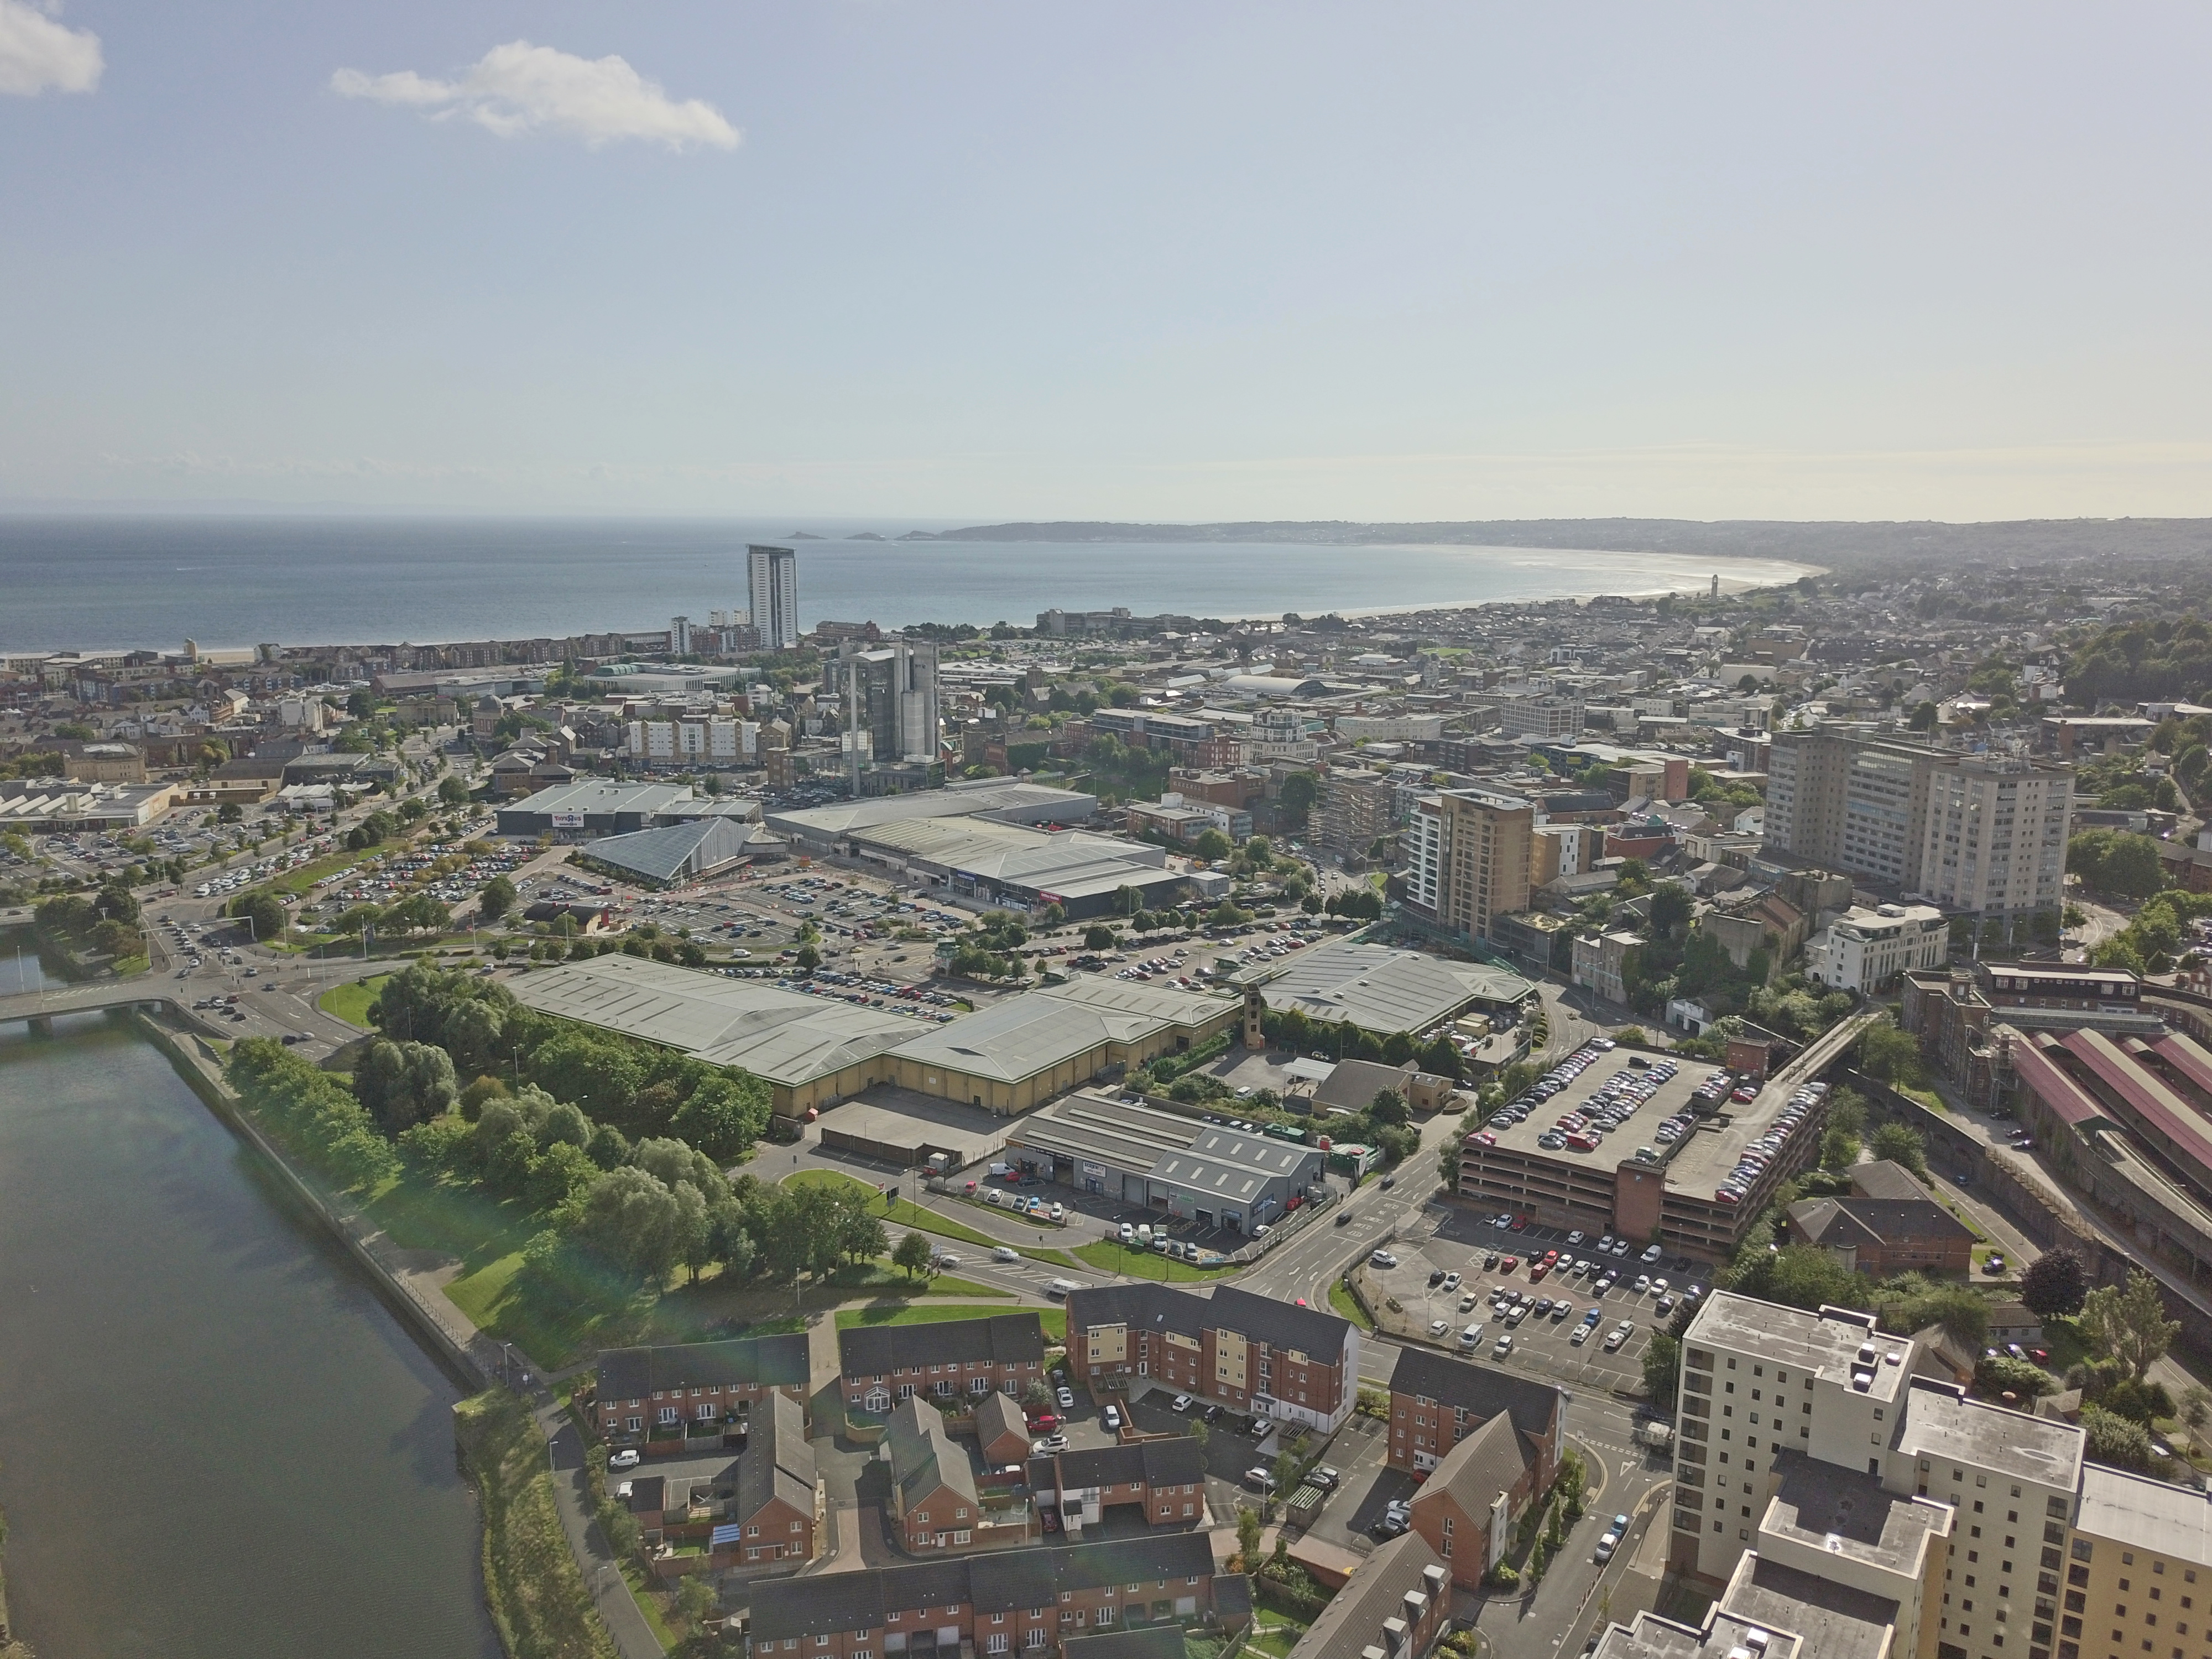 Aerial view of Swansea